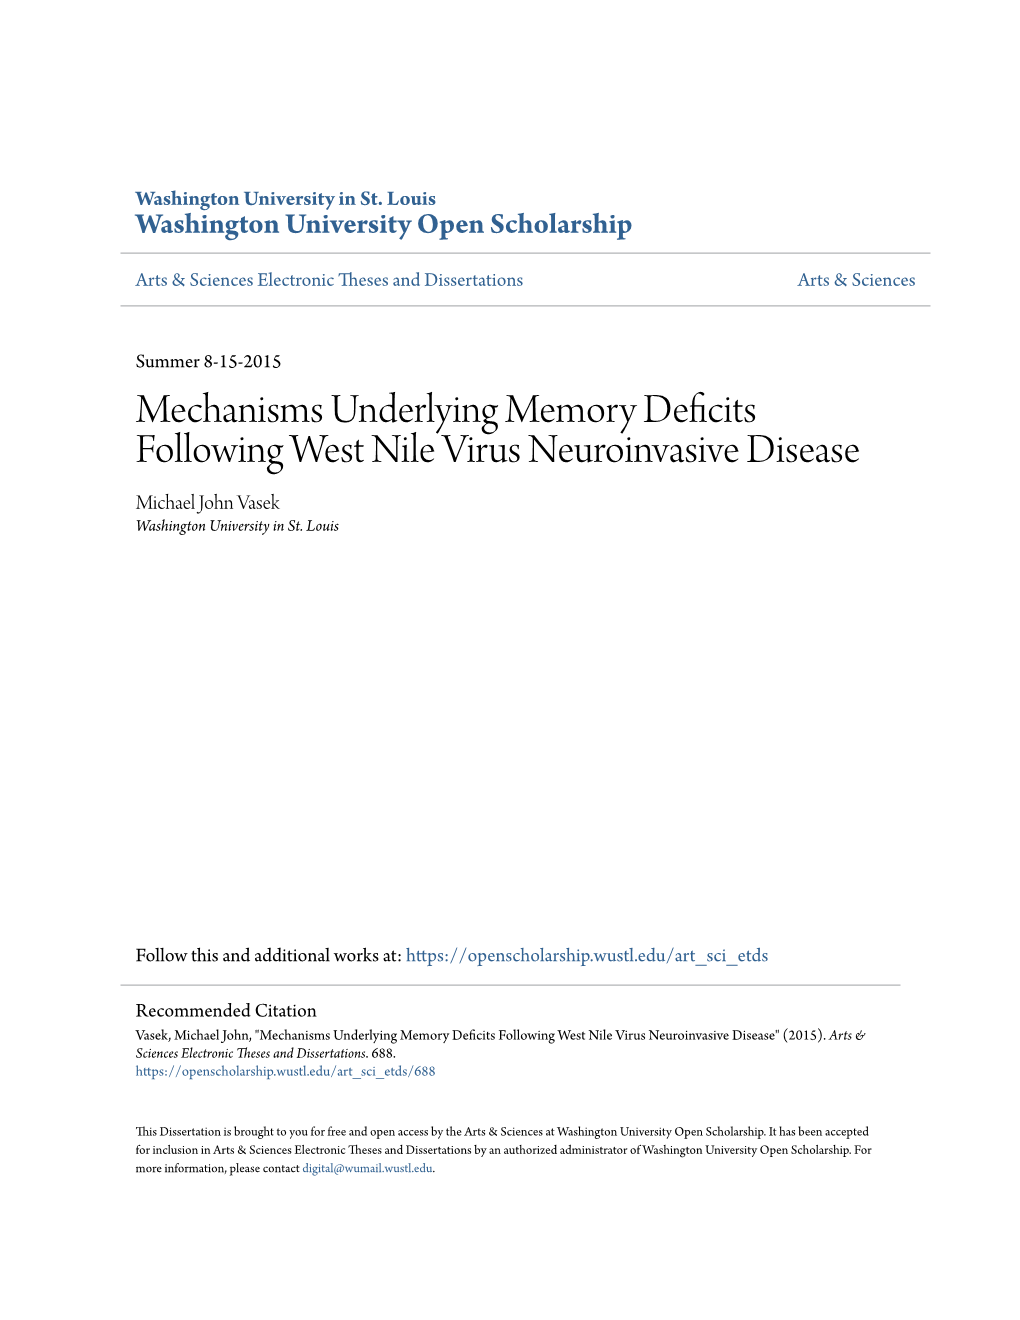 Mechanisms Underlying Memory Deficits Following West Nile Virus Neuroinvasive Disease Michael John Vasek Washington University in St